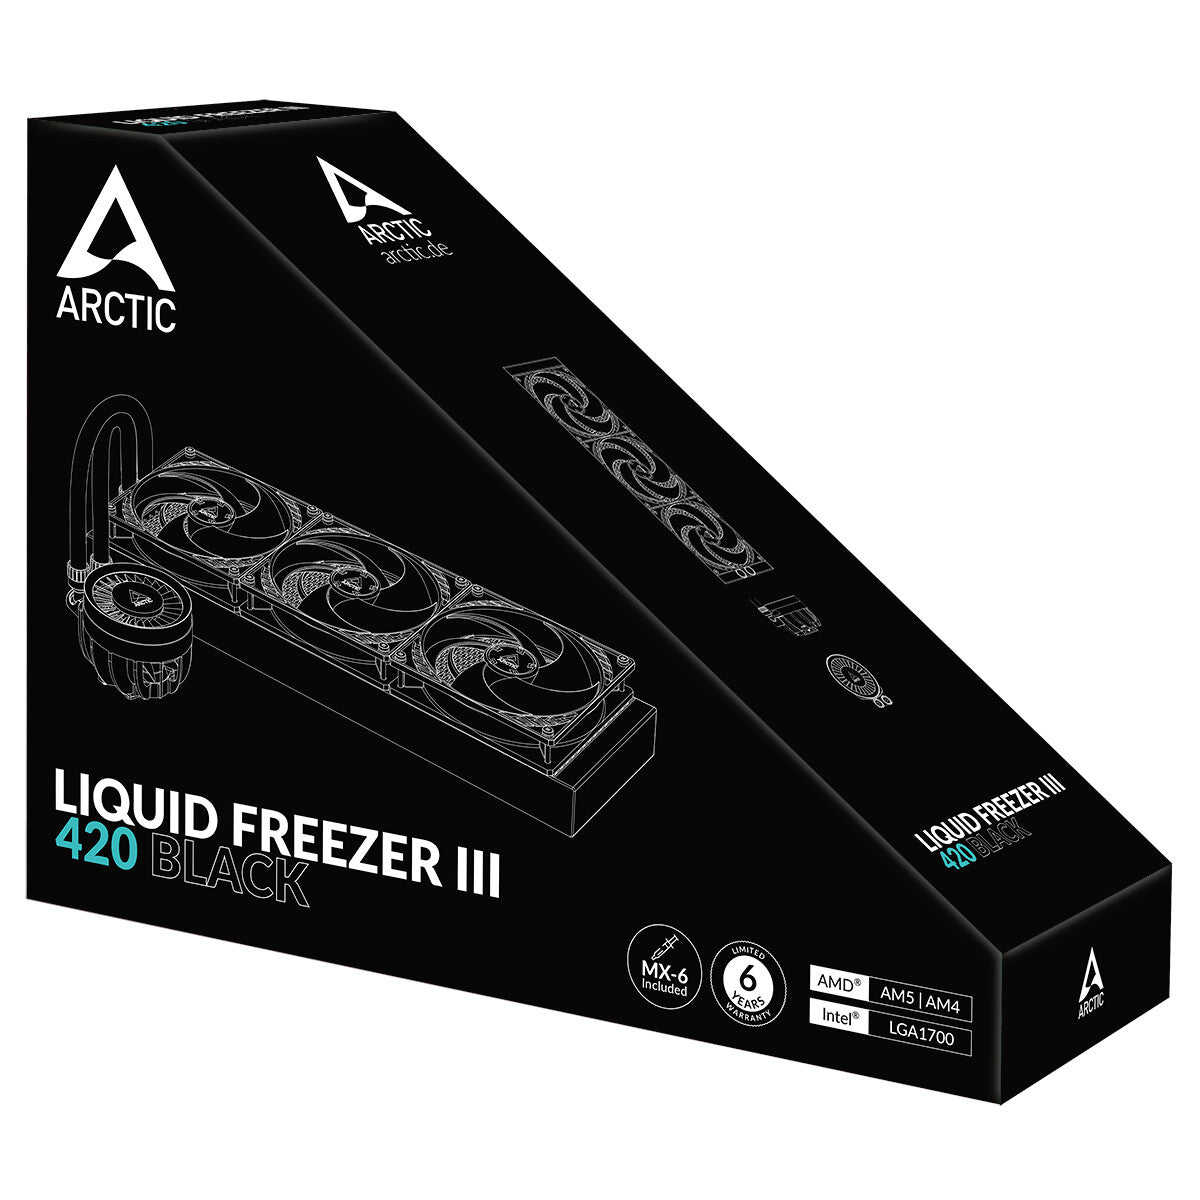 ARCTIC Liquid Freezer III 420 - All-in-one Liquid CPU Cooler in Black - 420mm